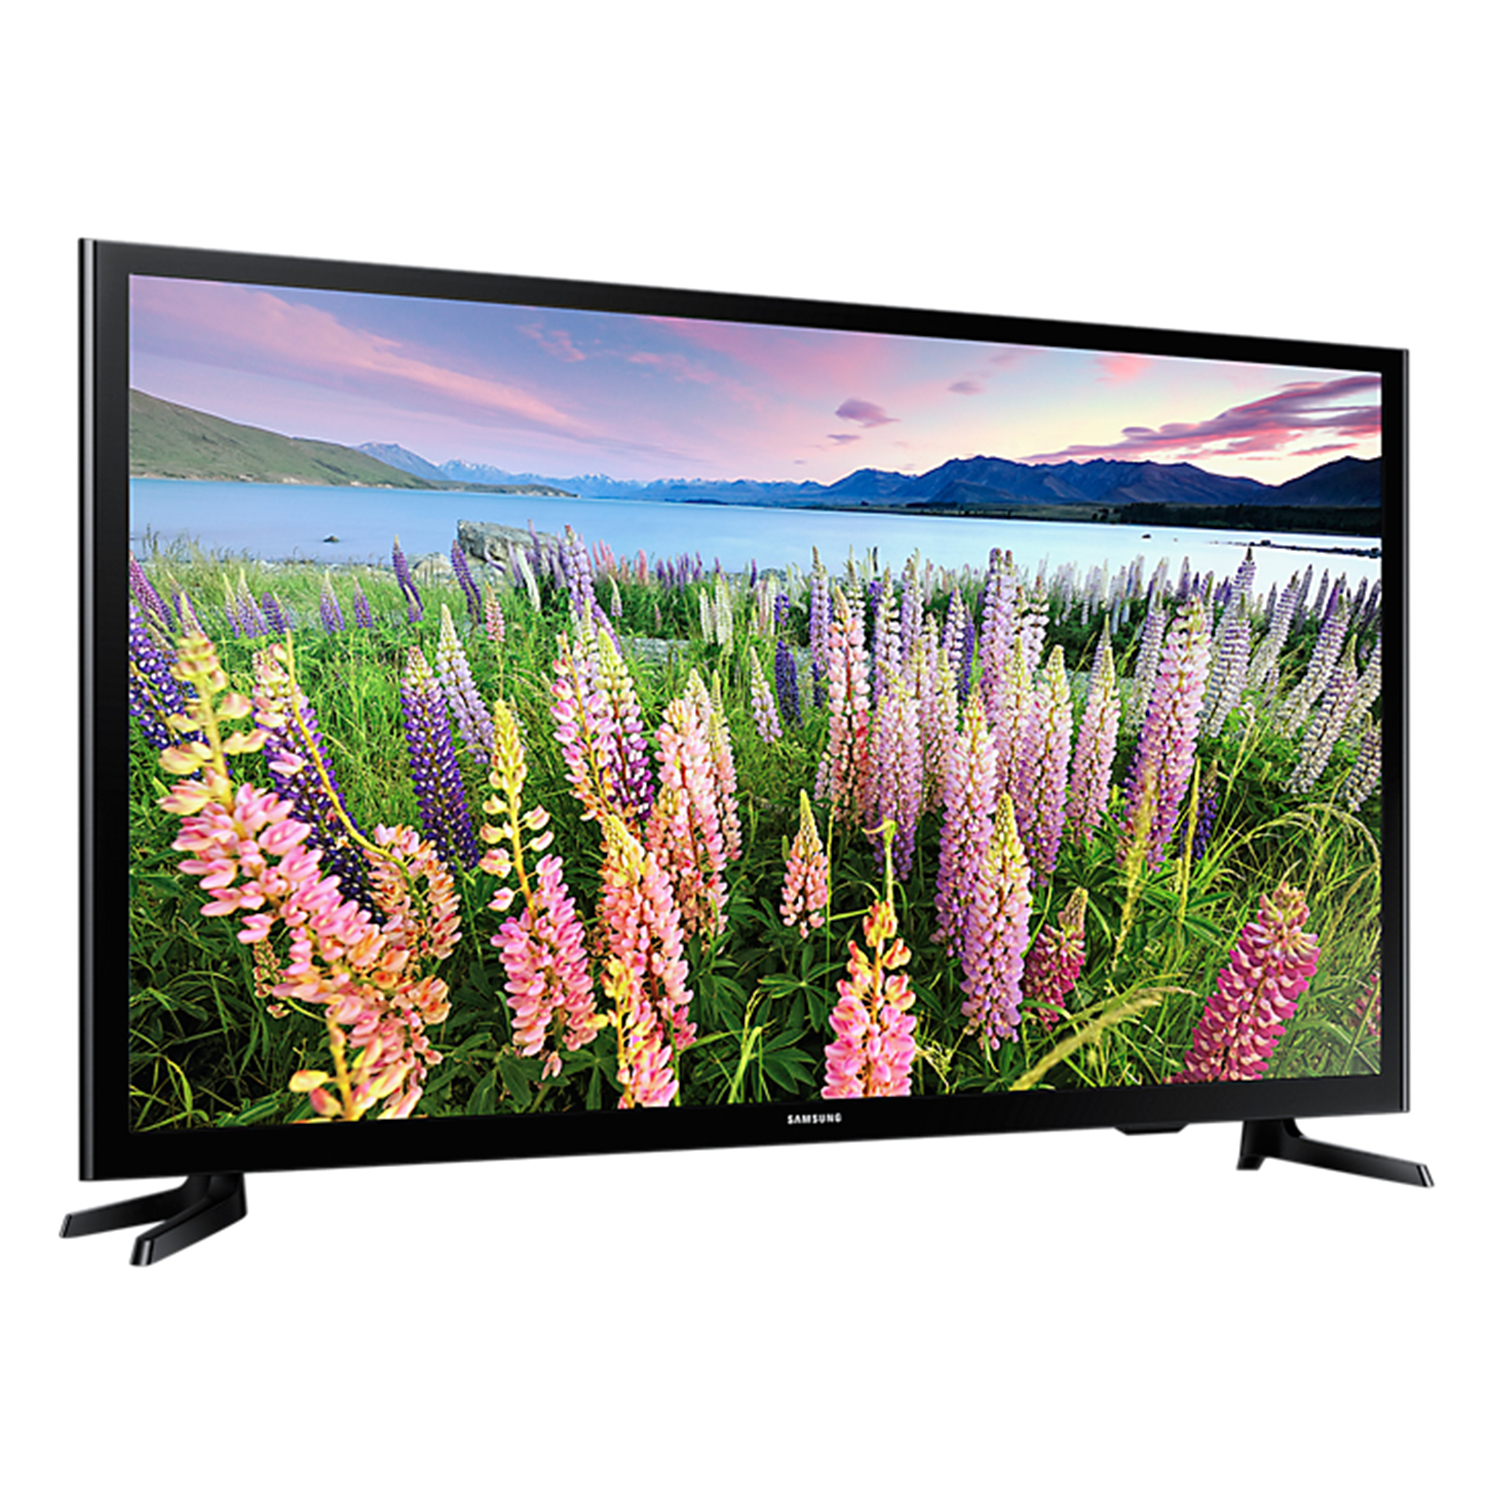 تلویزیون ال ای دی - LED TV سامسونگ-Samsung 40K5850-FULL HD -40 inch